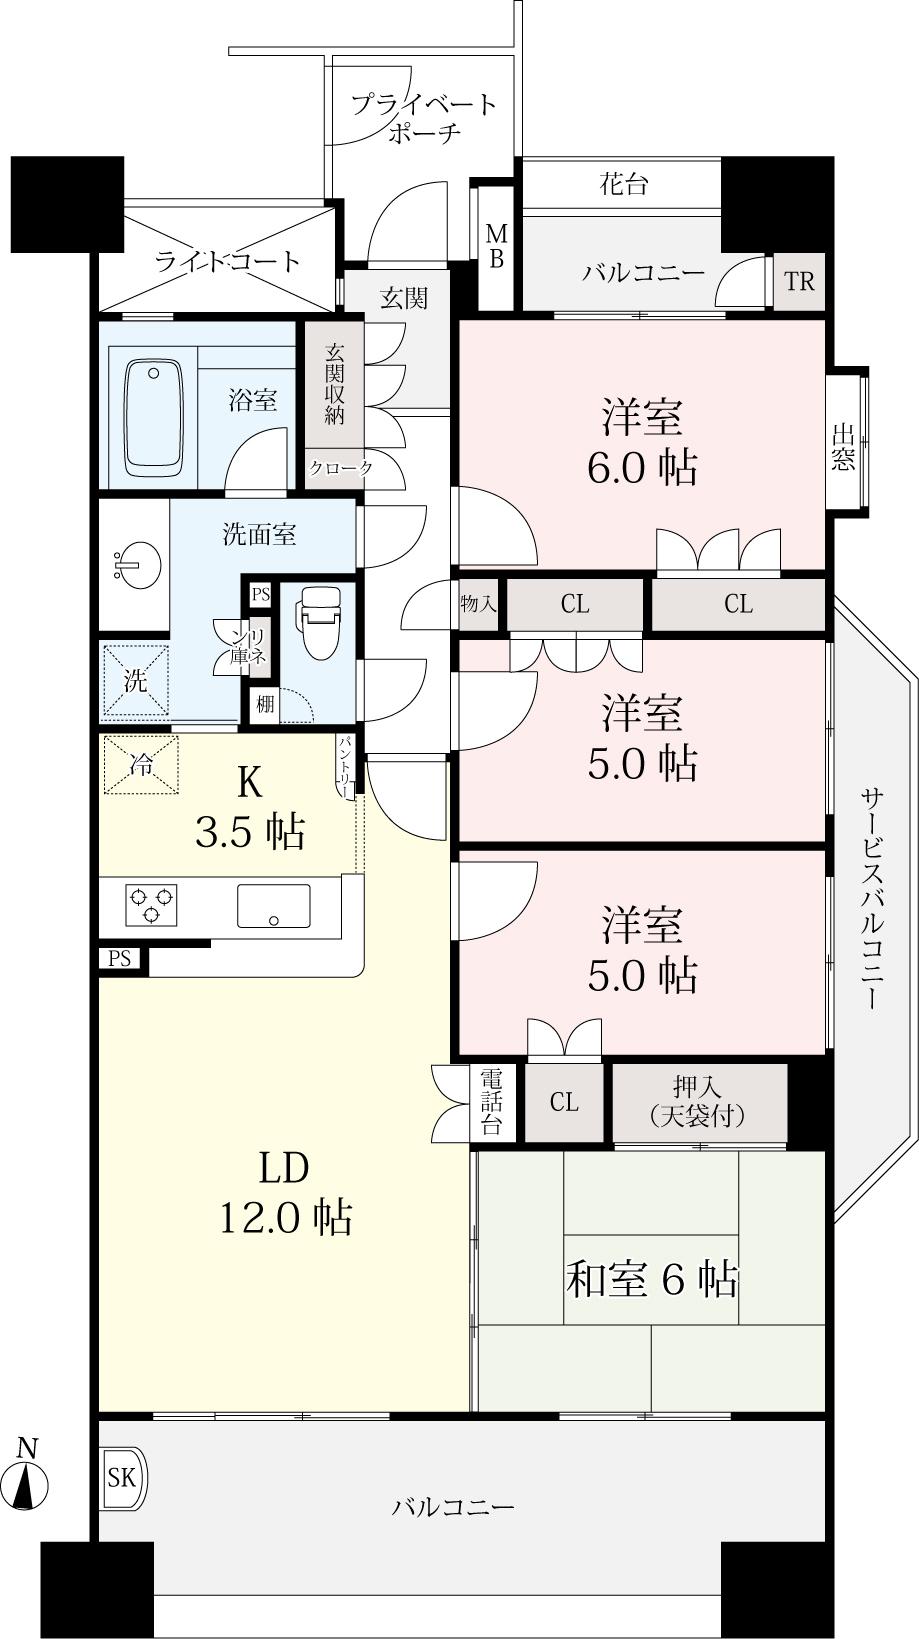 Floor plan. 4LDK, Price 23.8 million yen, Occupied area 83.37 sq m , Balcony area 23.2 sq m floor plan